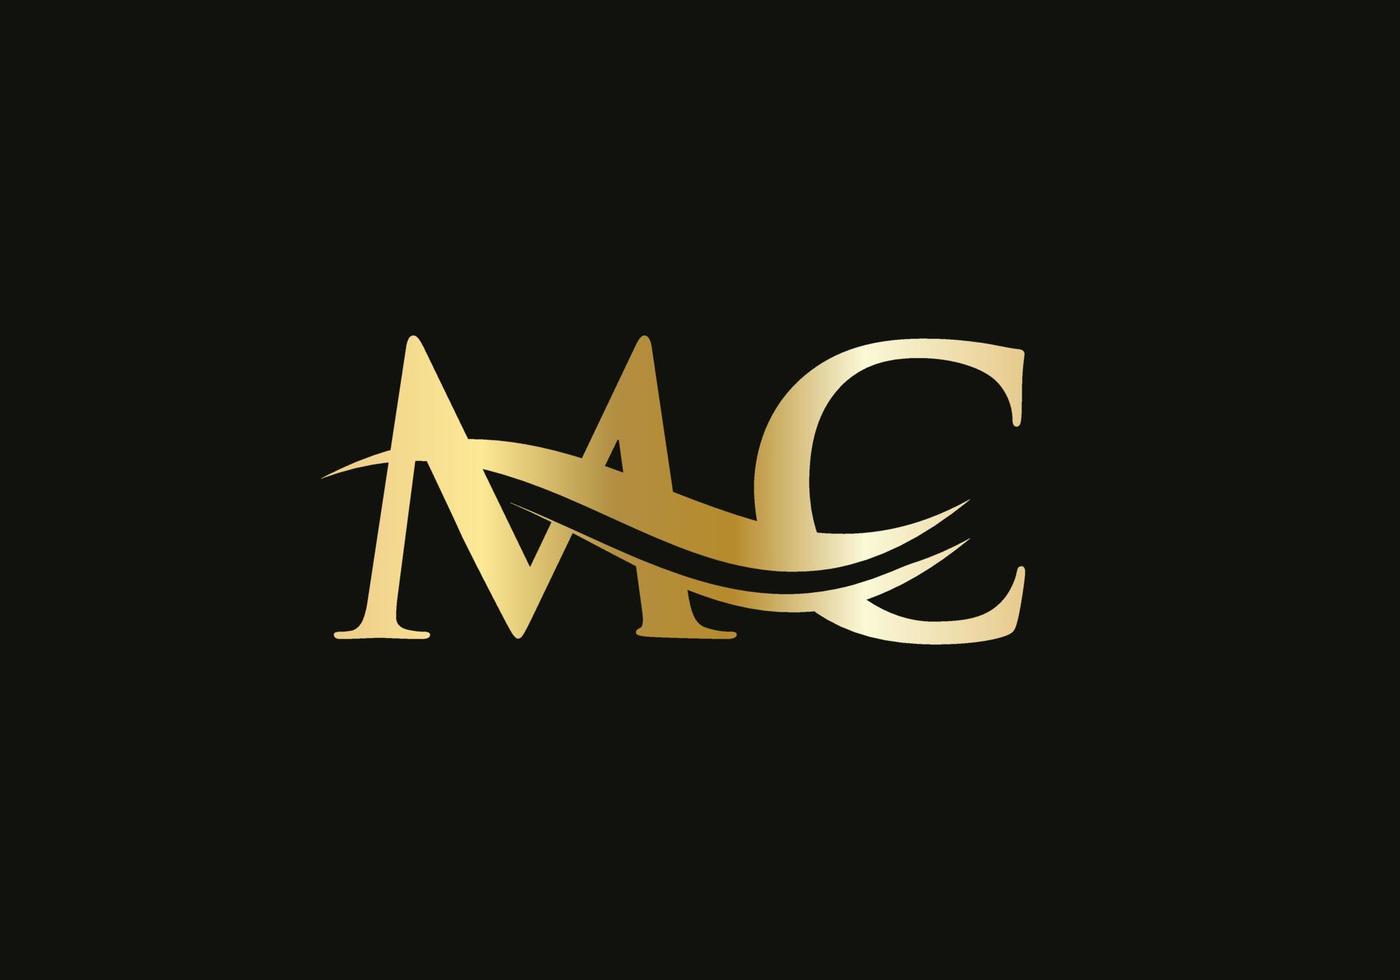 Initial Gold letter MC logo design. MC logo design with modern trendy vector